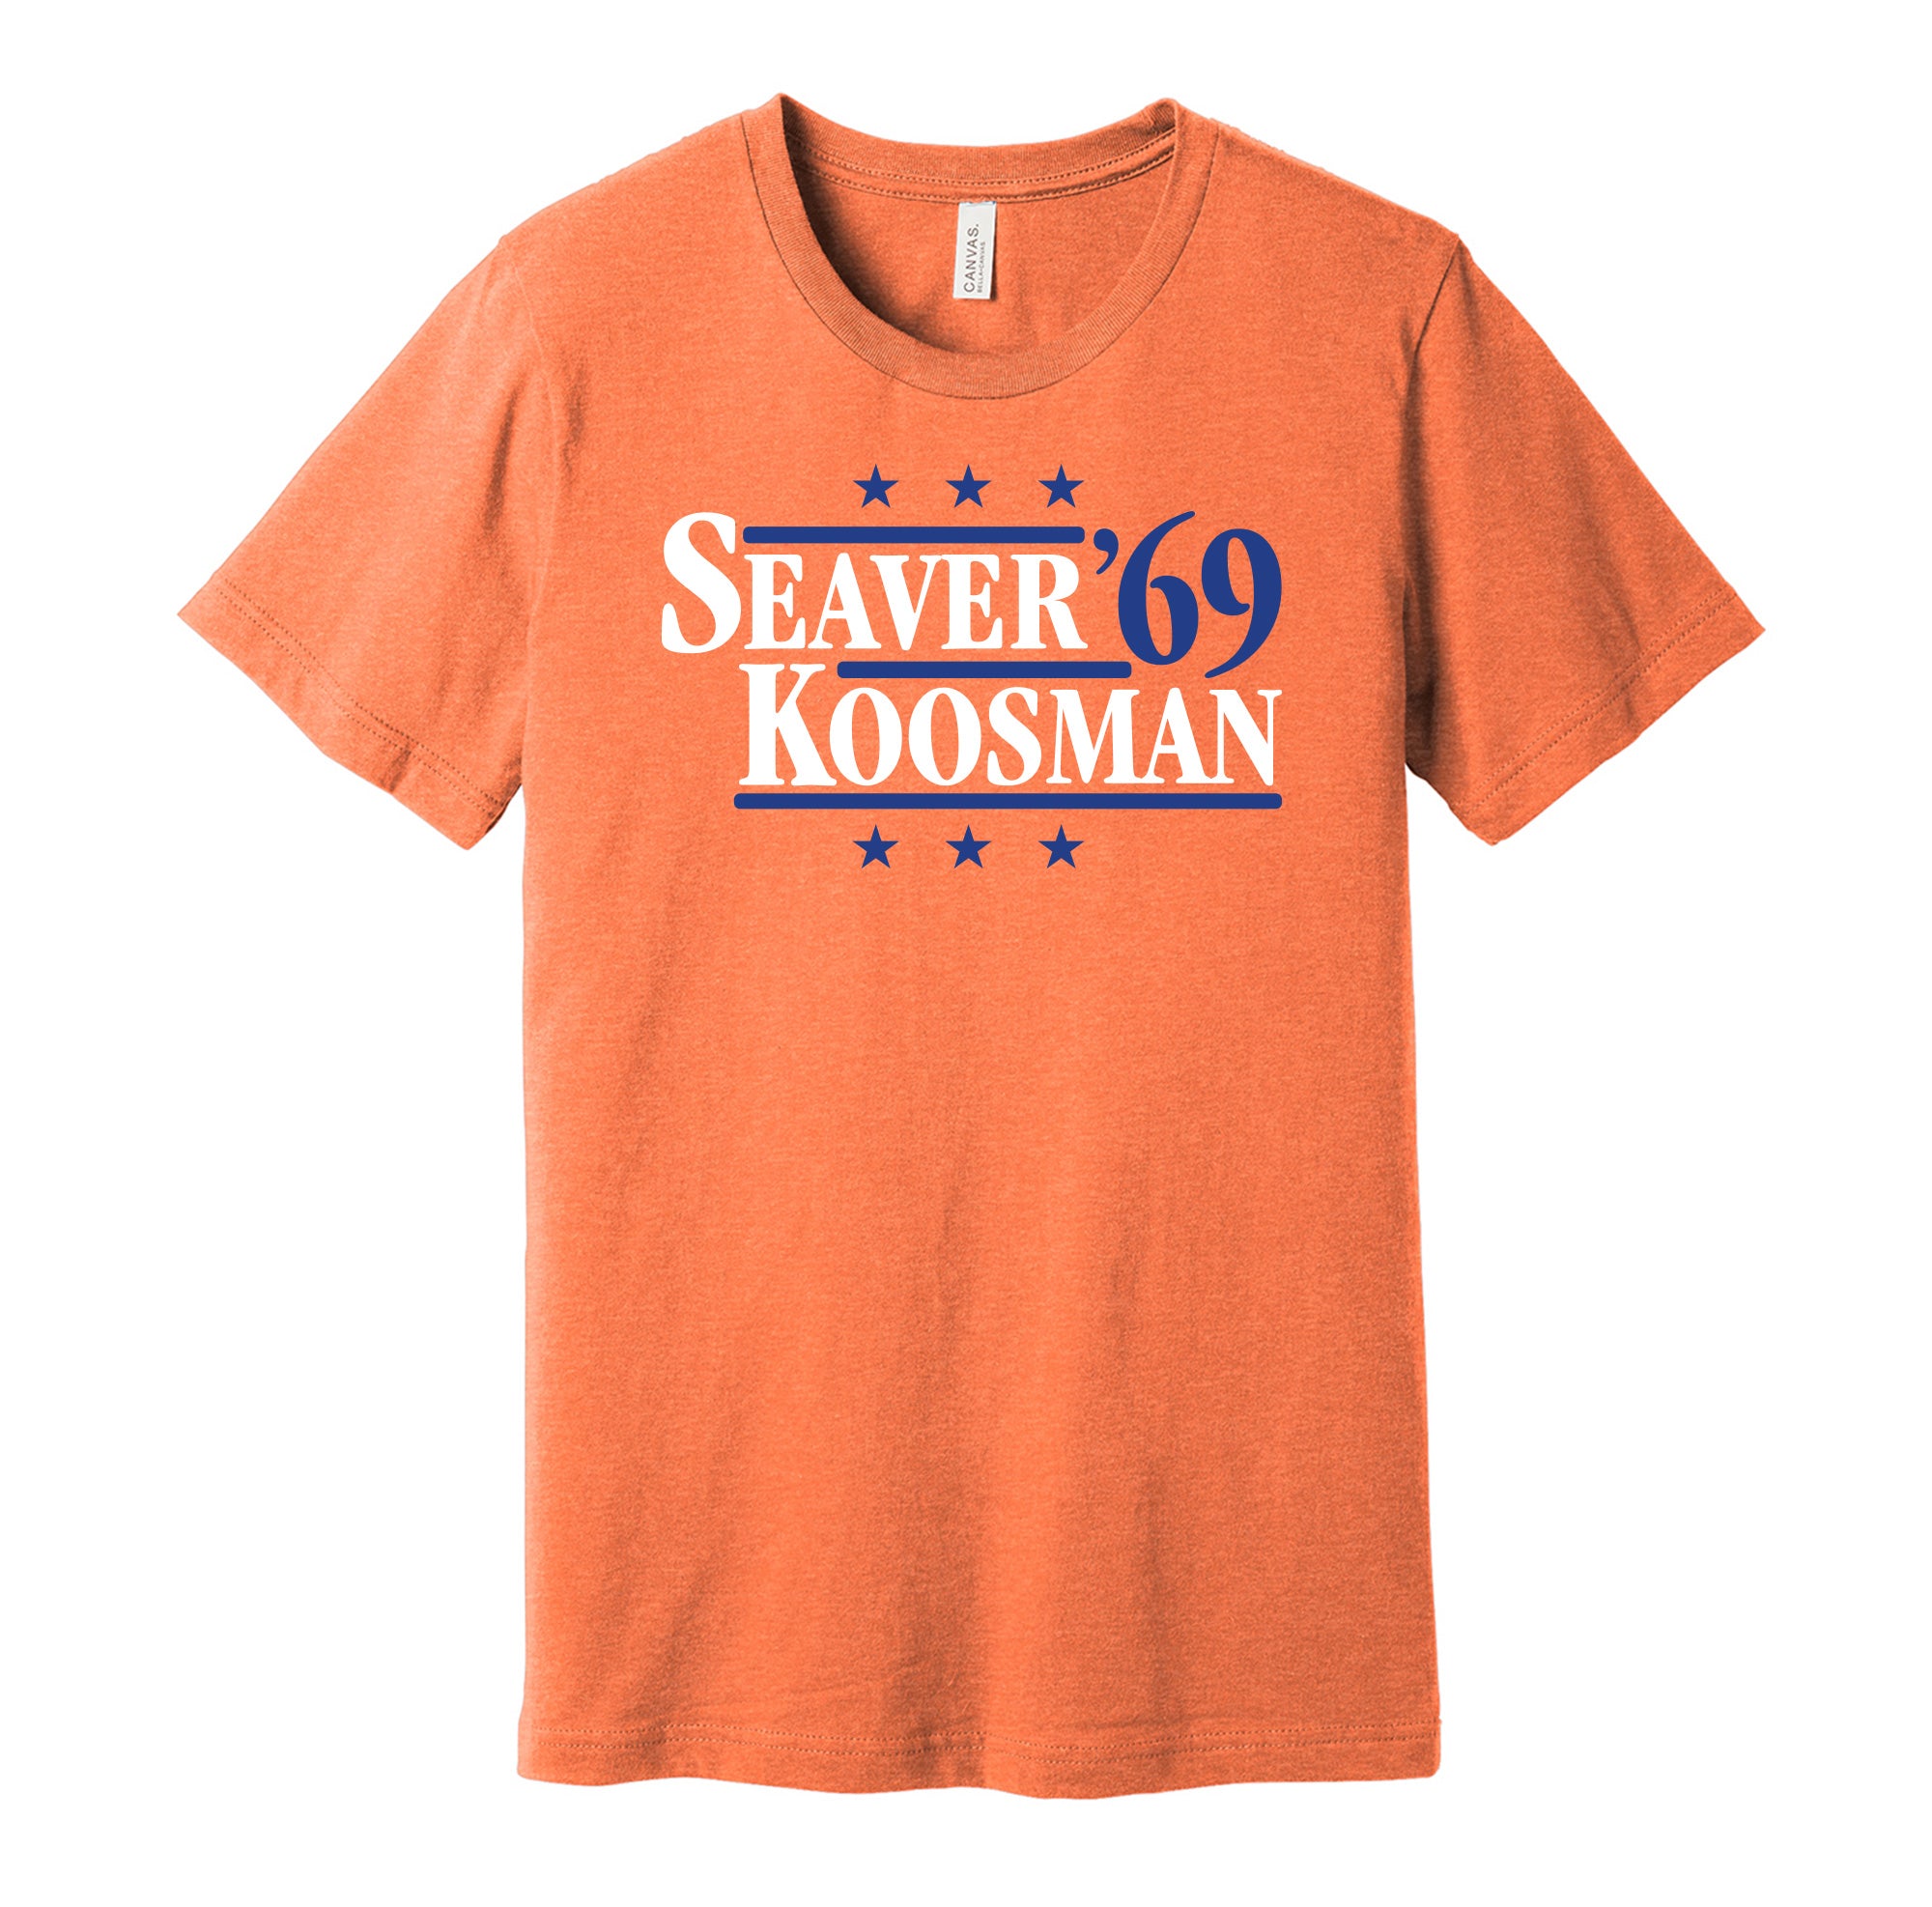 Seaver & Koosman '69 - New York Baseball Legends Political Campaign Parody T-Shirt - Hyper Than Hype Shirts XS / Orange Shirt